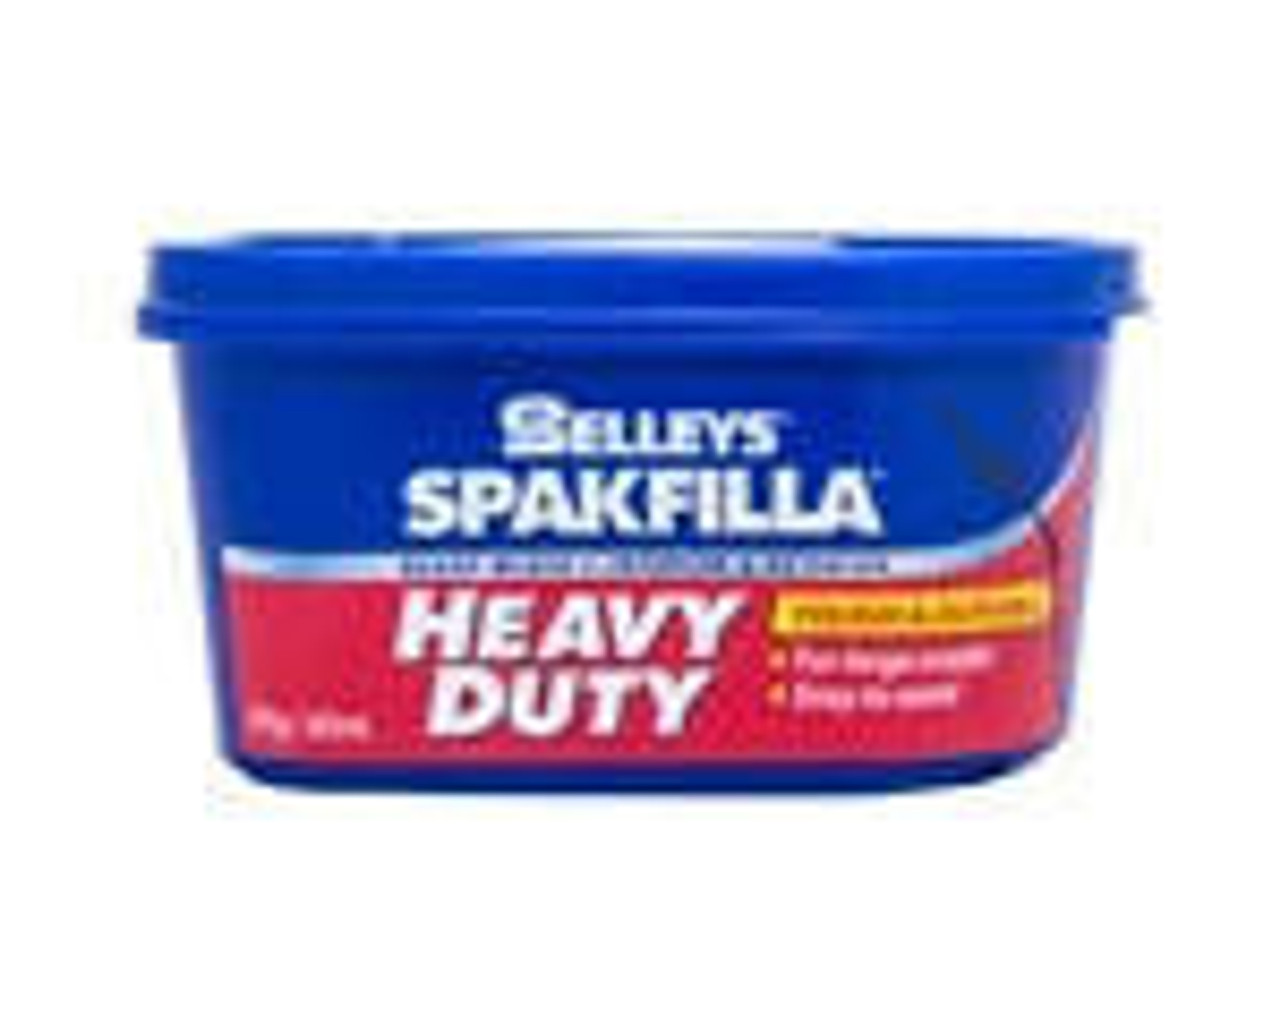 Selleys Spakfilla Heavy Duty